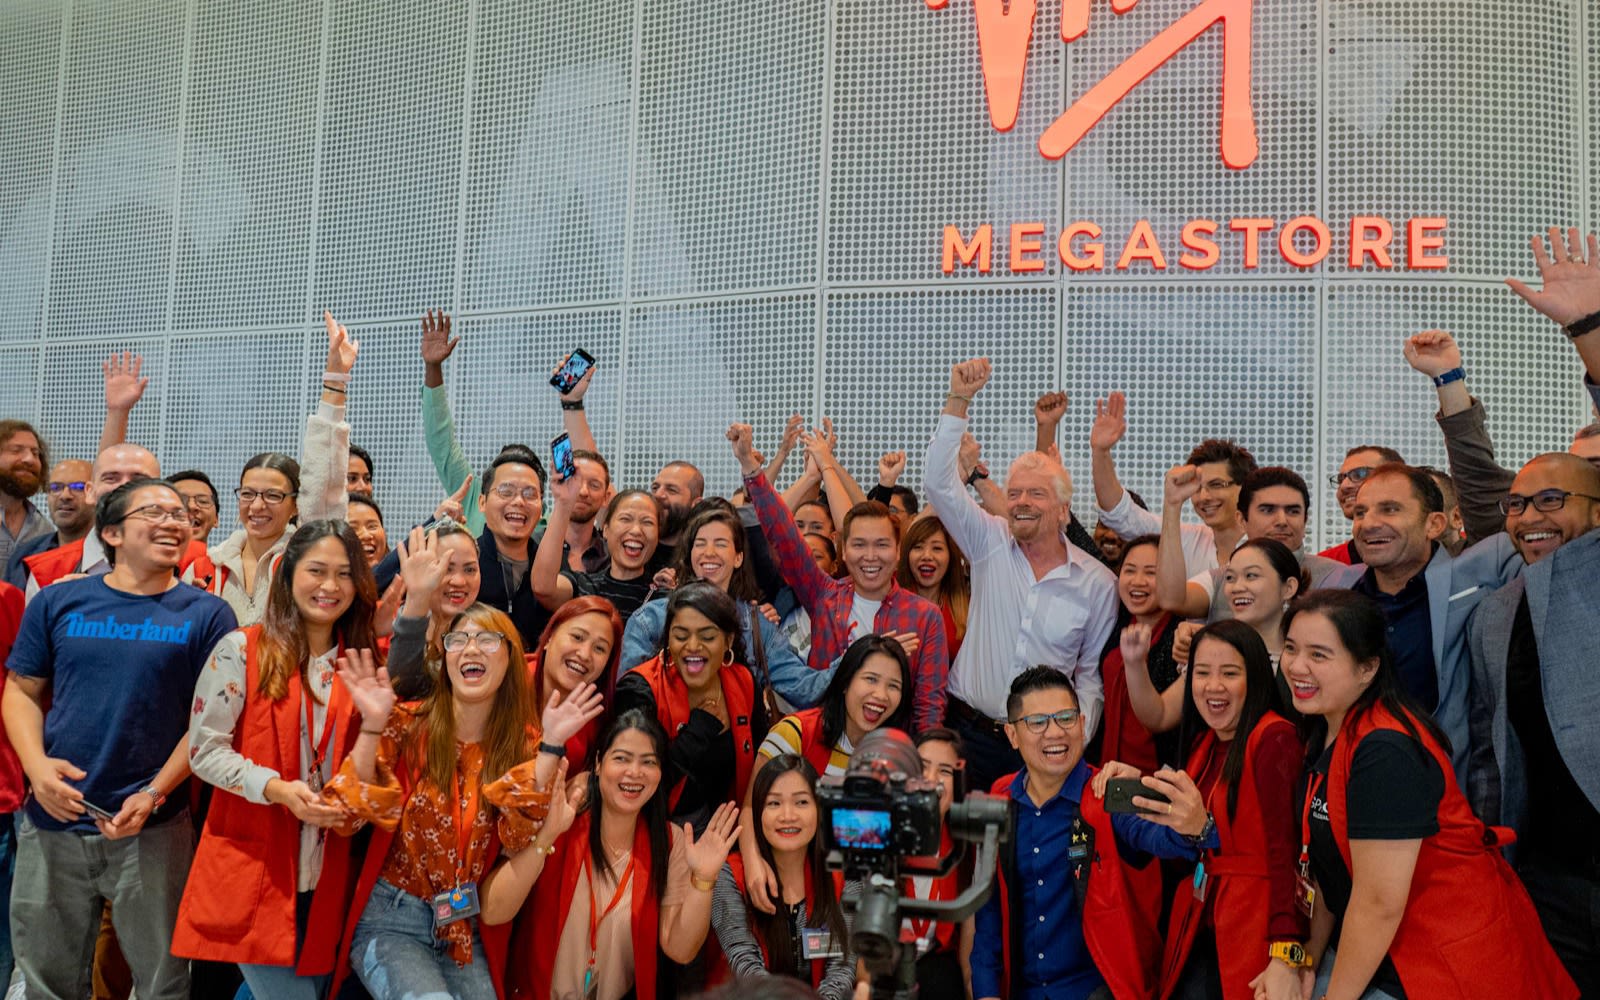 Richard Branson with the Virgin Megastore team in Dubai